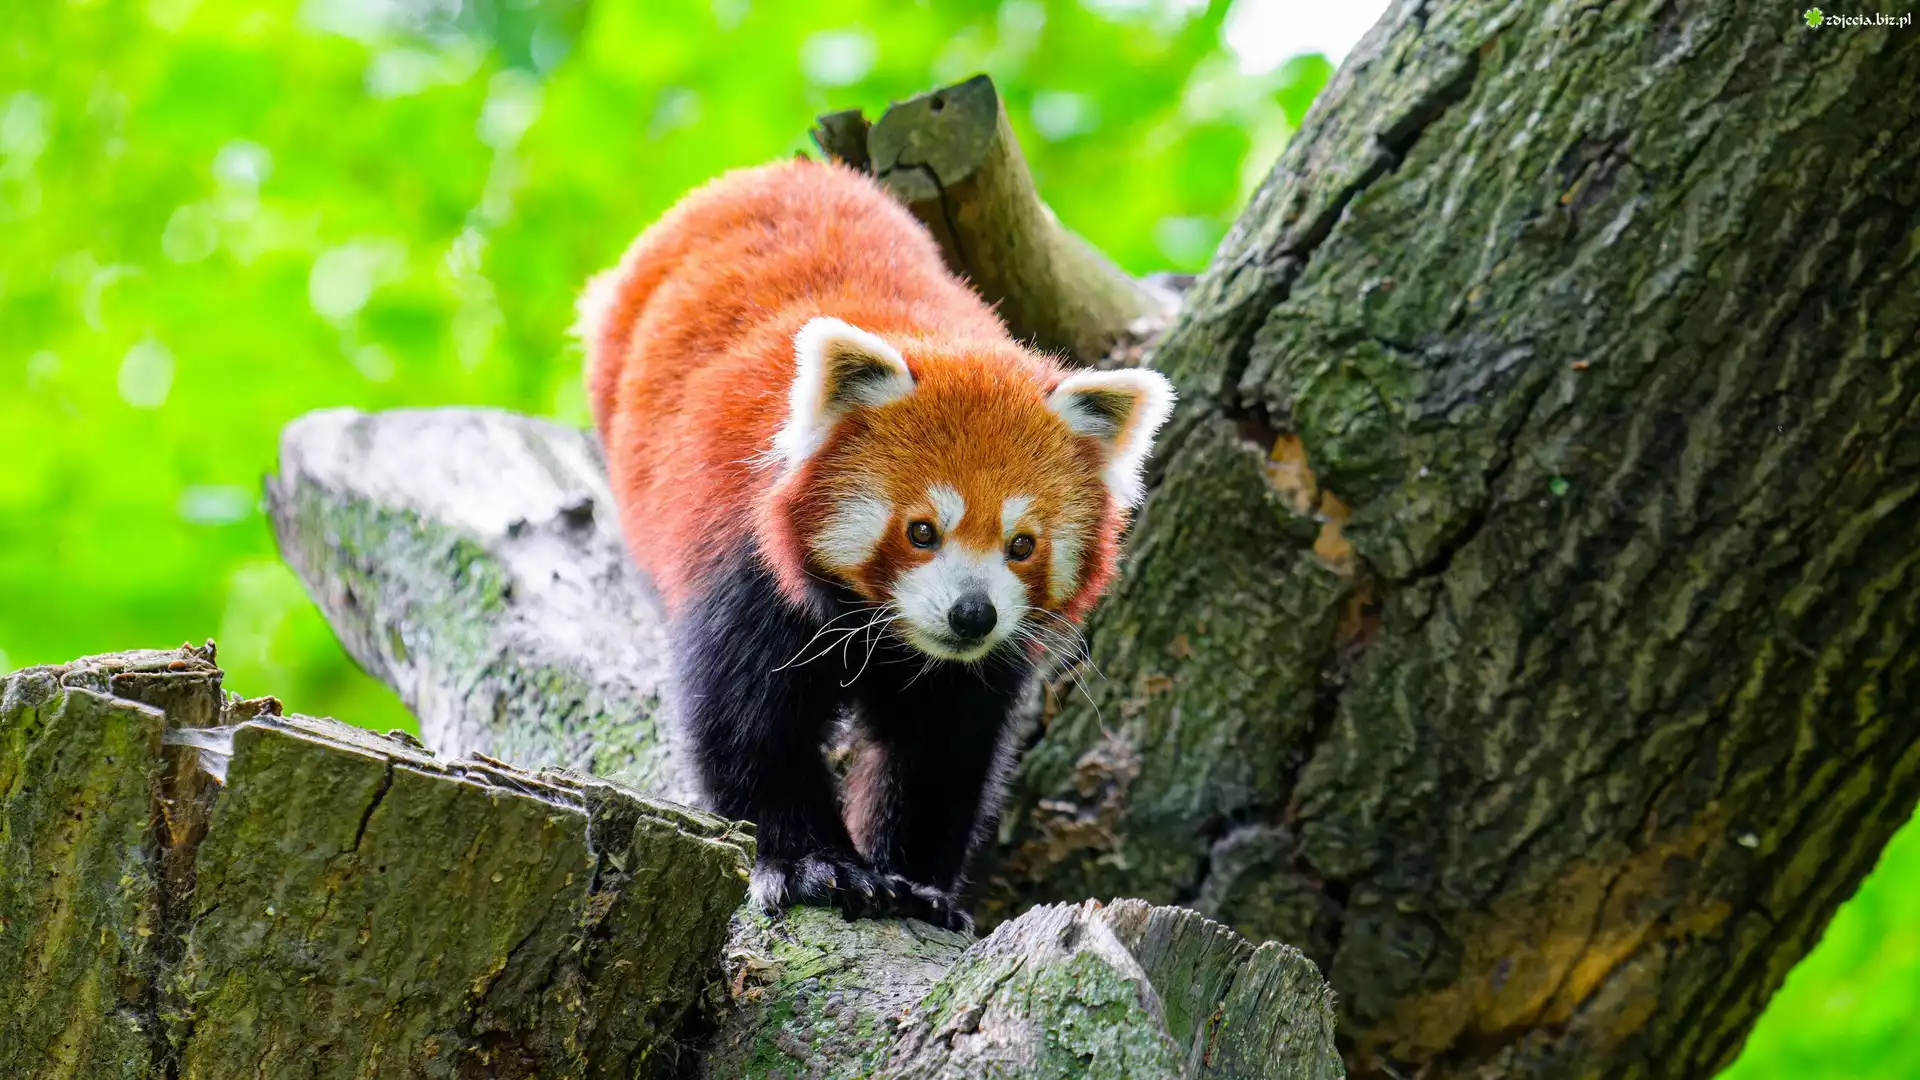 Czerwona panda, Pandka ruda, Drzewo